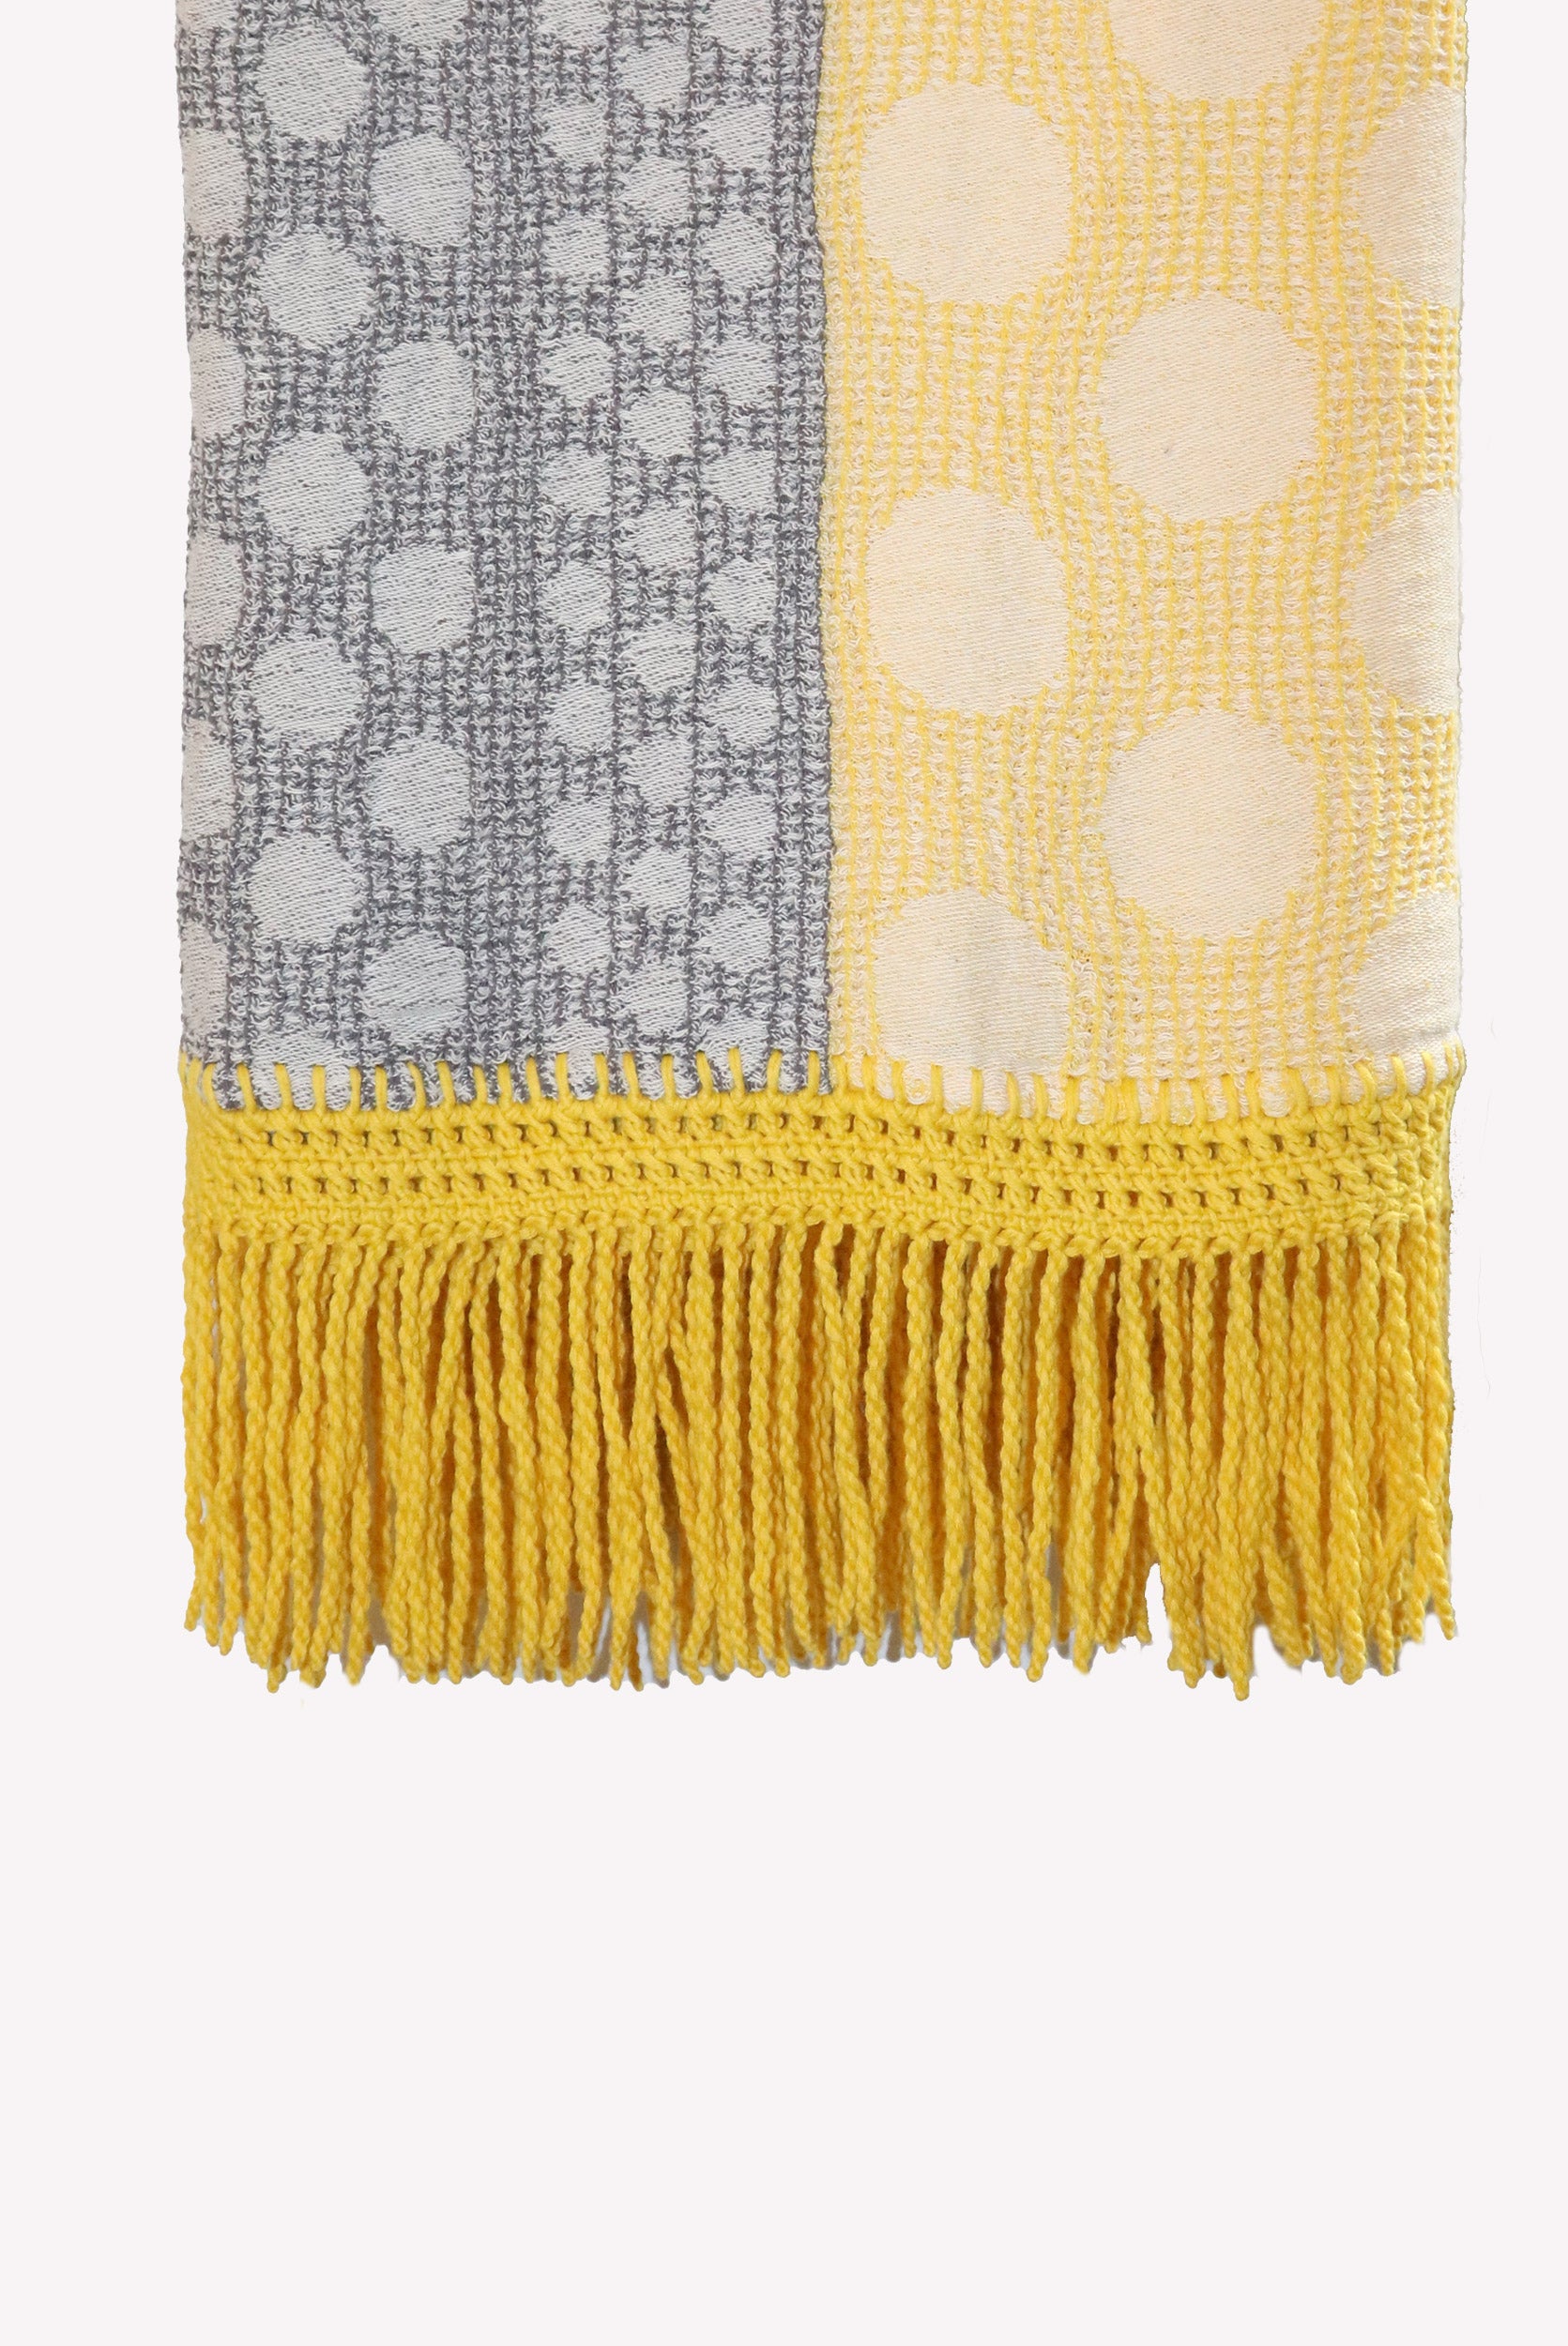 Shell Beach Towel - Yellow